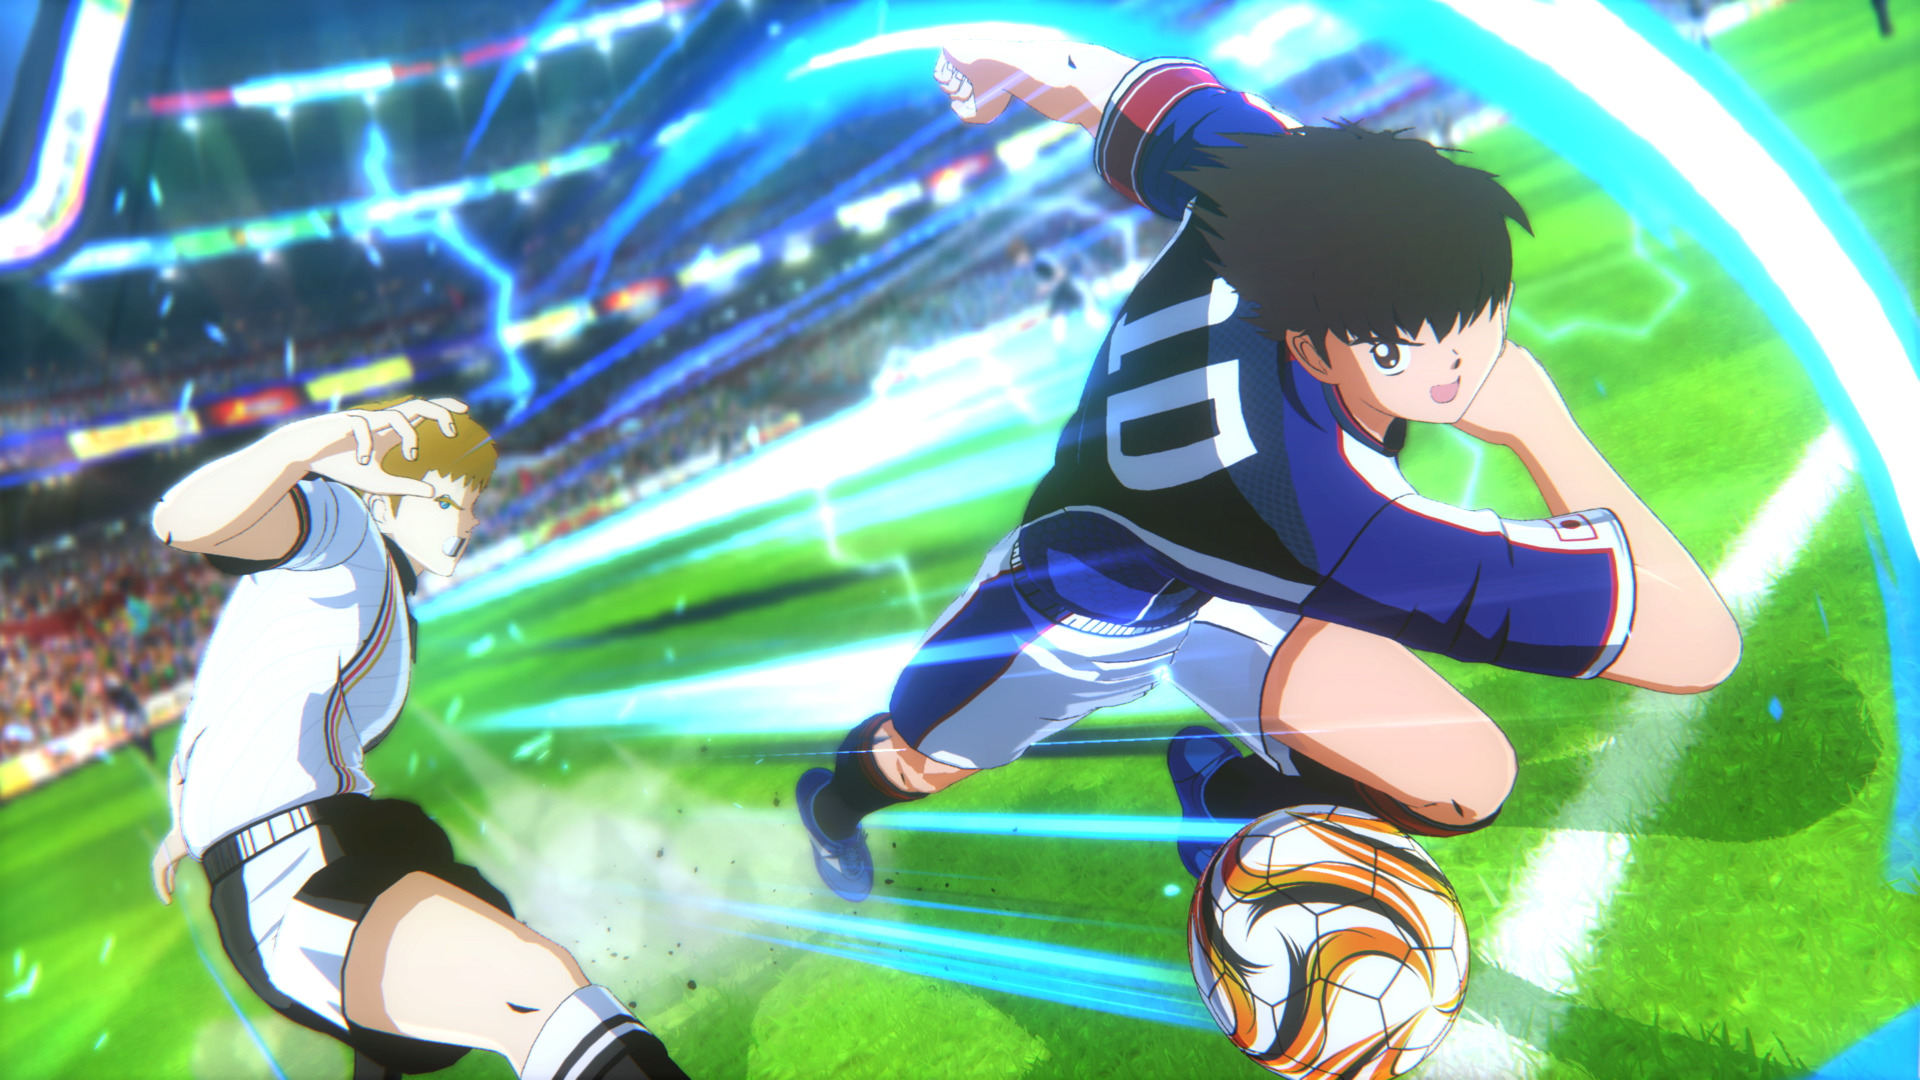 994378 descargar imagen captain tsubasa: rise of new champions, videojuego: fondos de pantalla y protectores de pantalla gratis